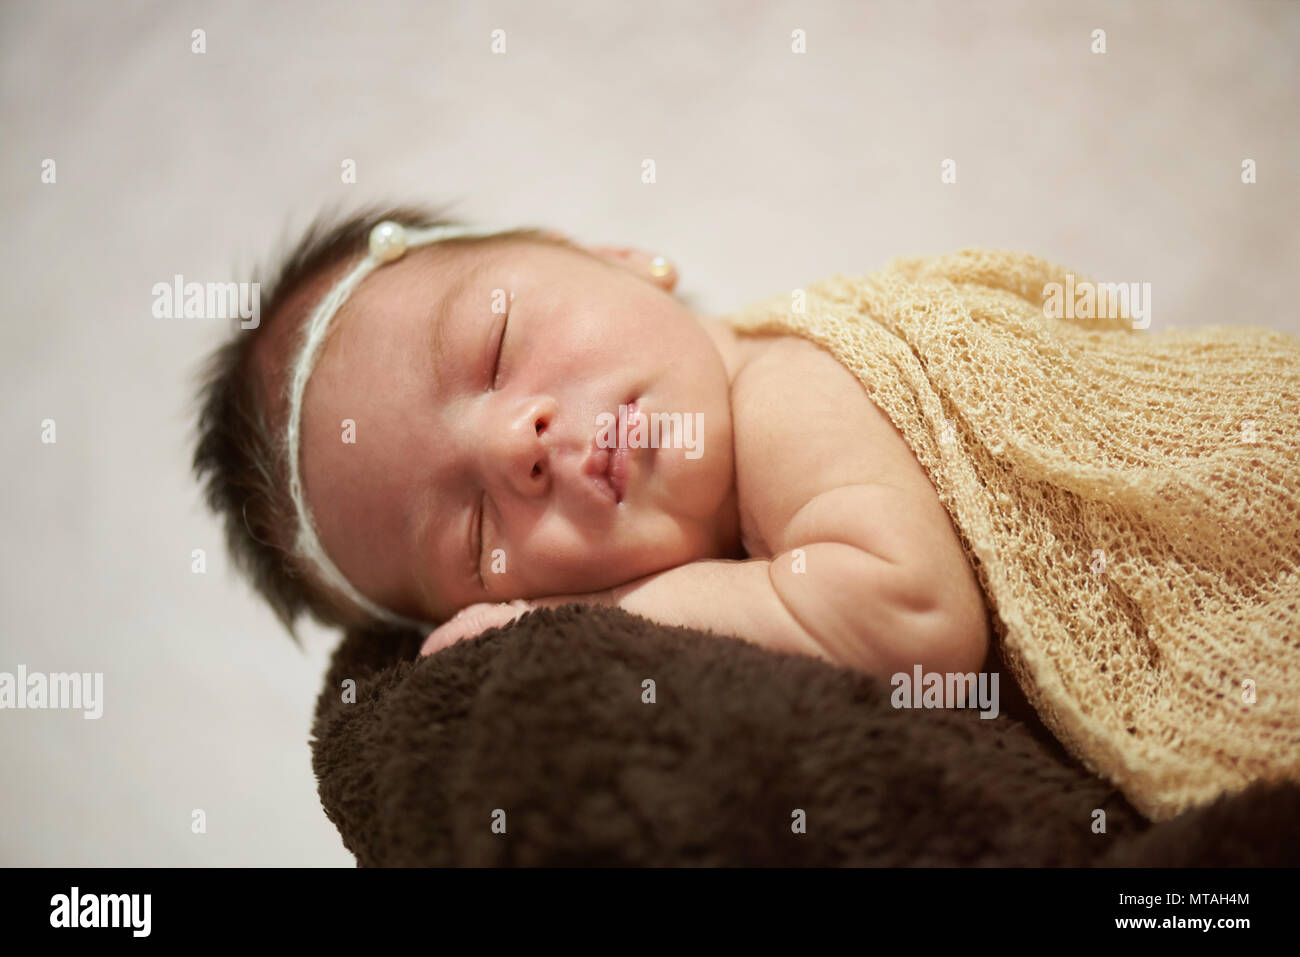 Newborn baby taking nap close up view on bright background Stock Photo